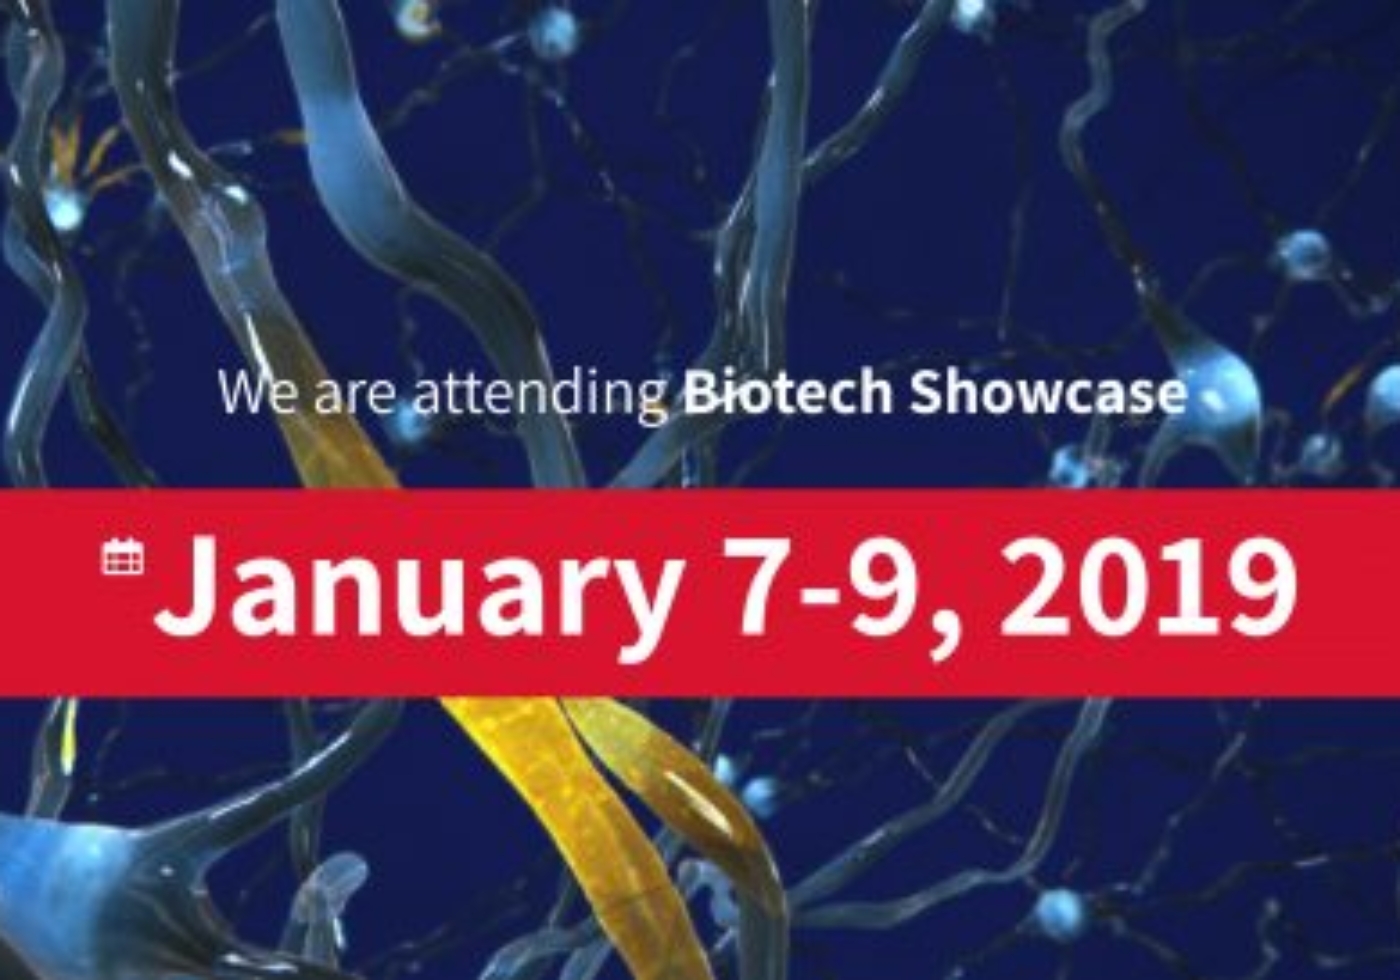 Biotech Showcase Poster